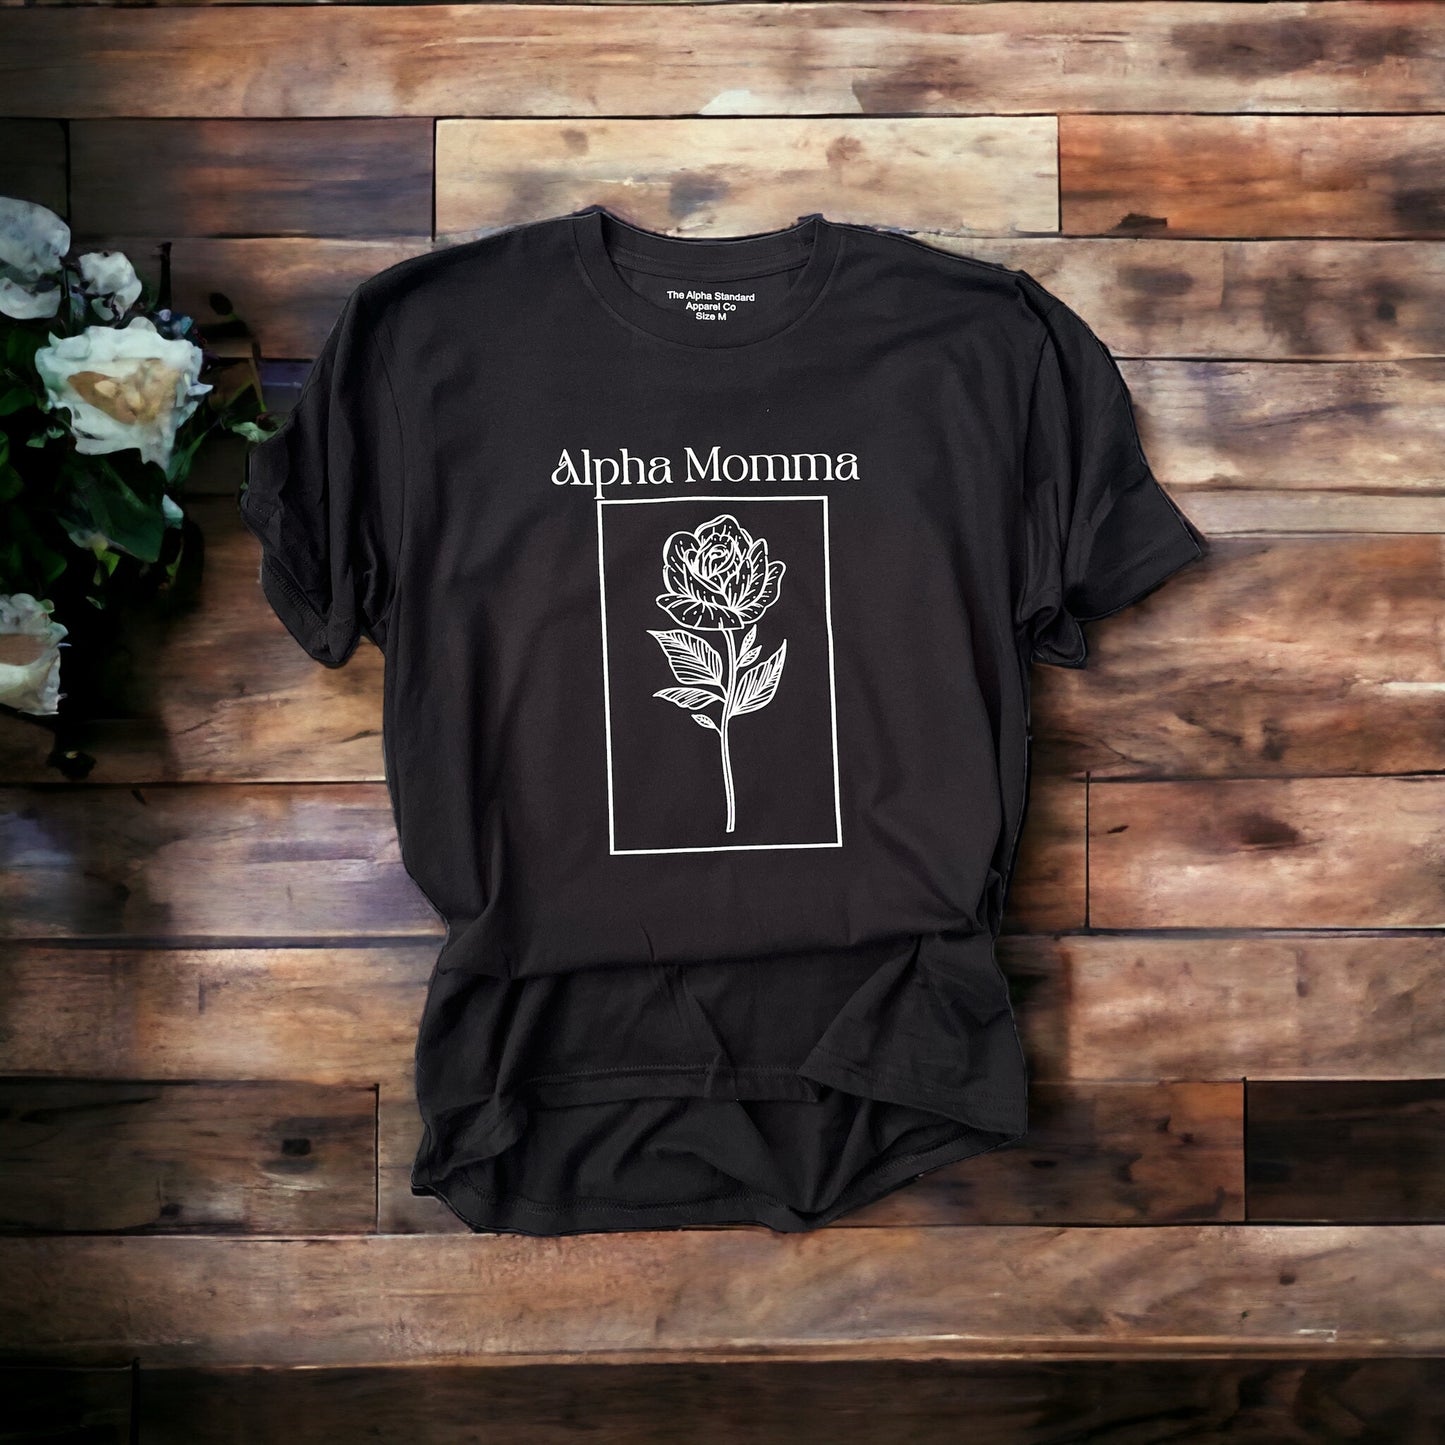 "Alpha Momma" super soft T-shirt